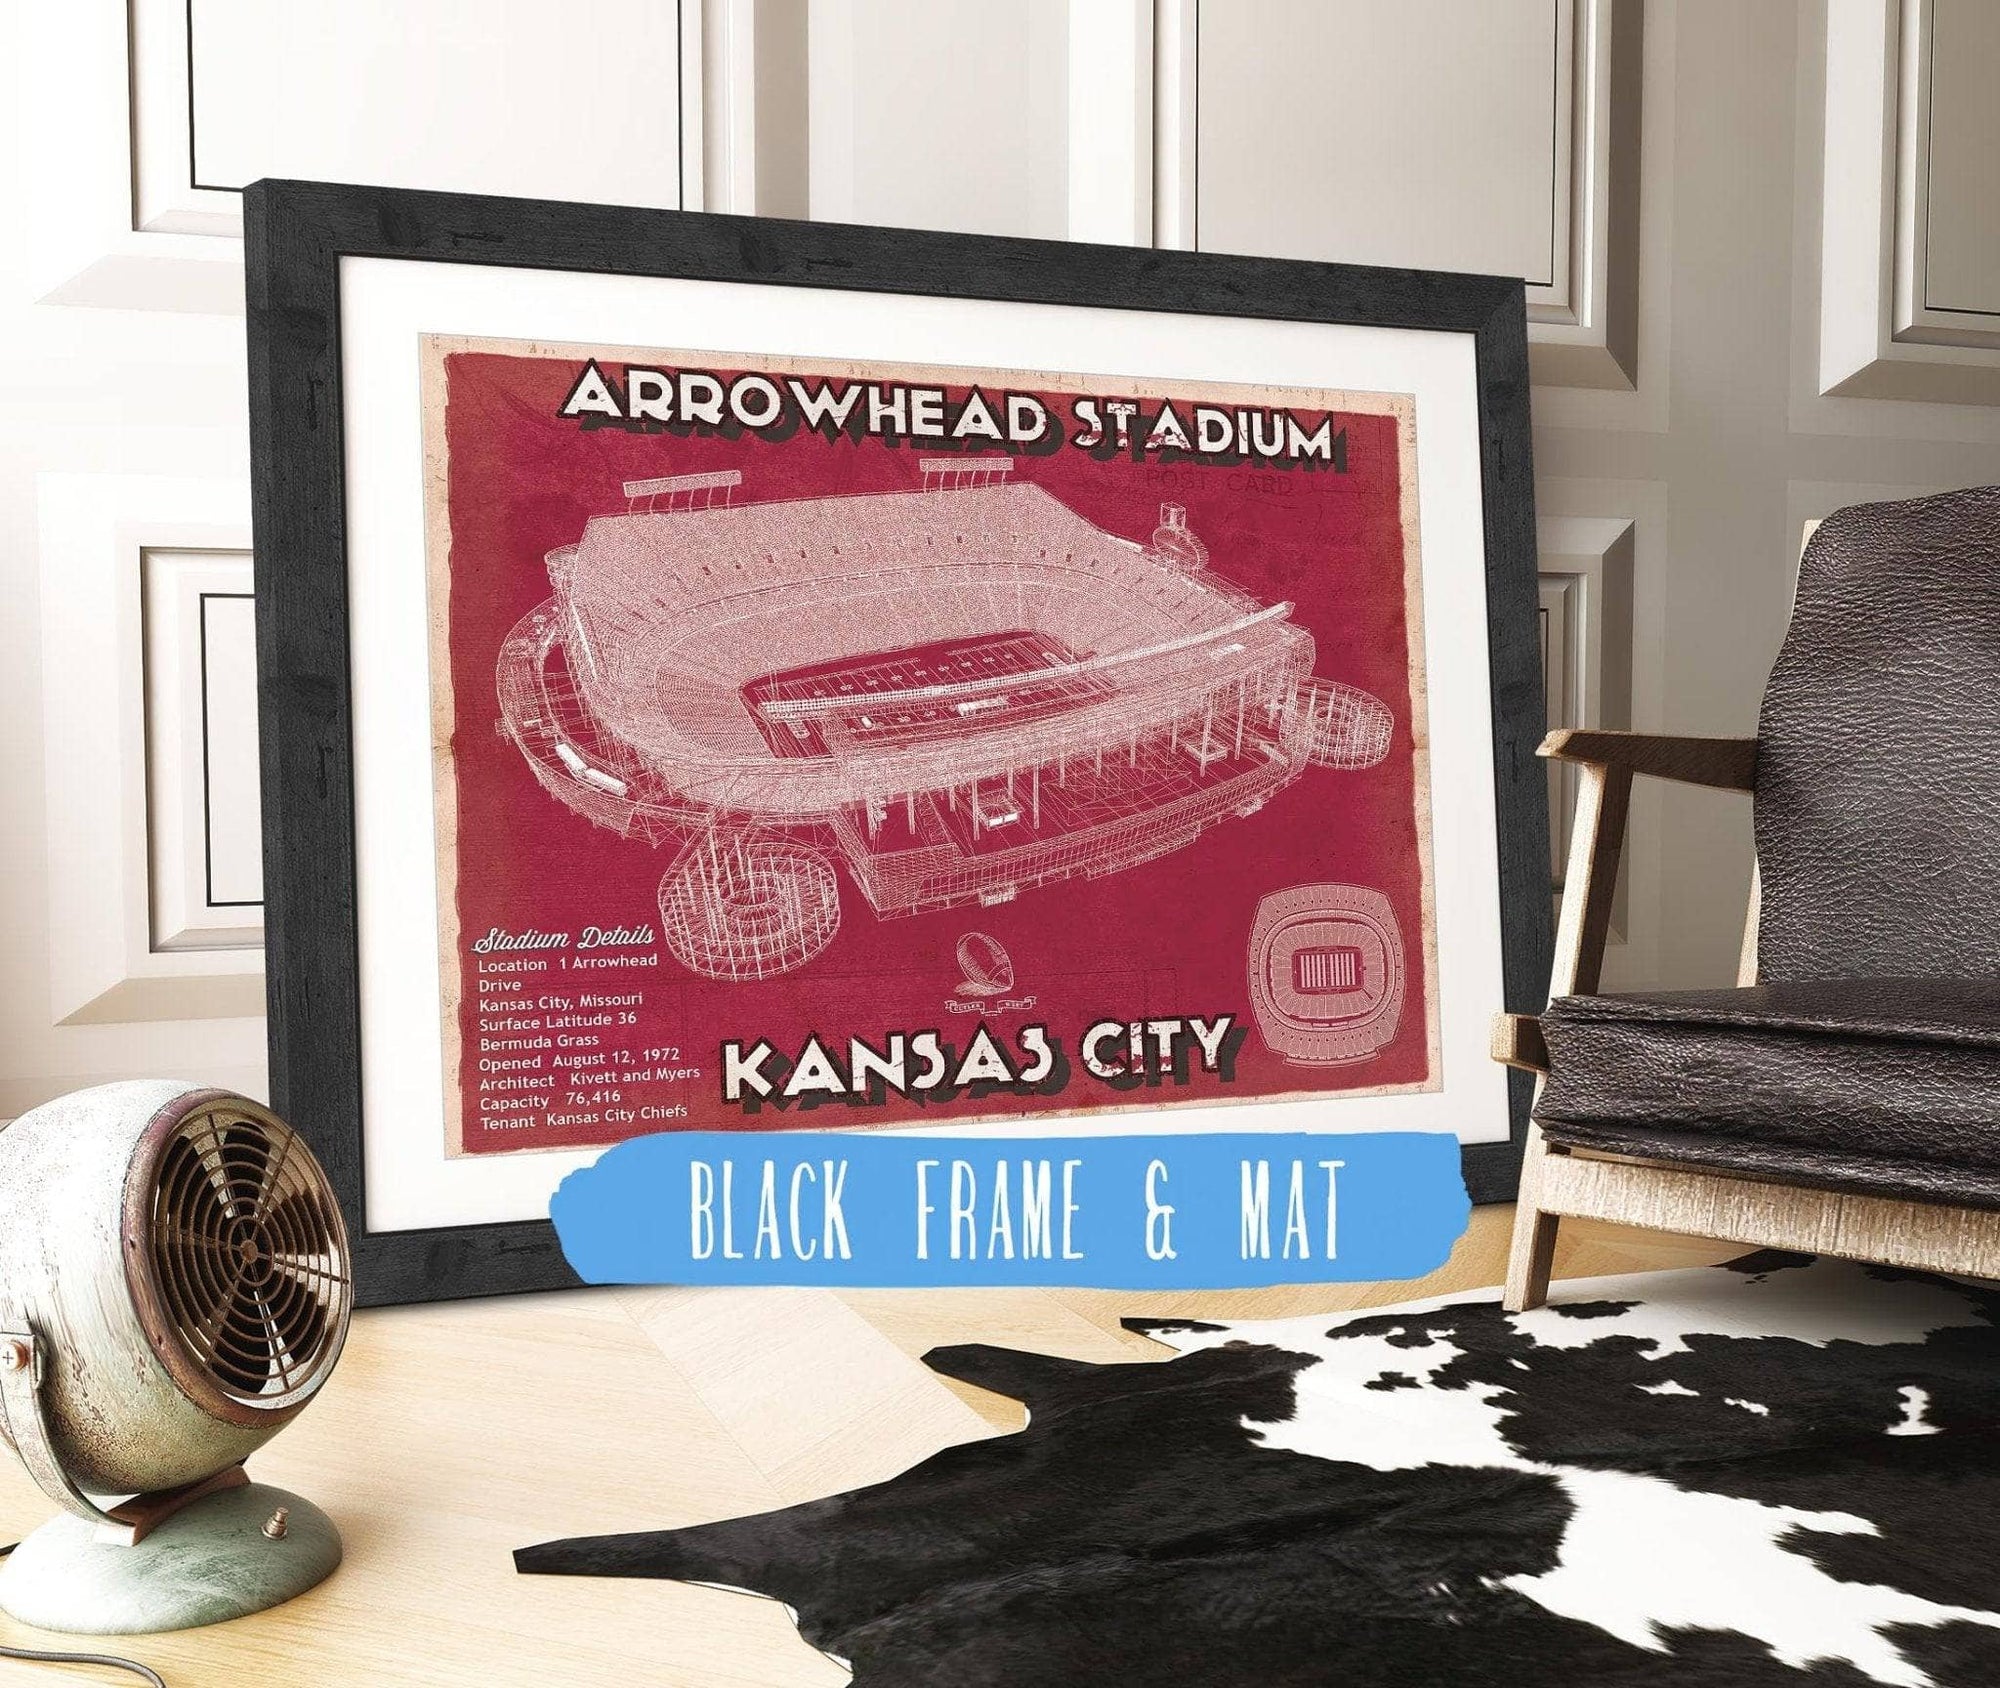 Cutler West Pro Football Collection 14" x 11" / Black Frame & Mat Kansas City Chiefs Arrowhead Stadium Vintage Football Print 698887690